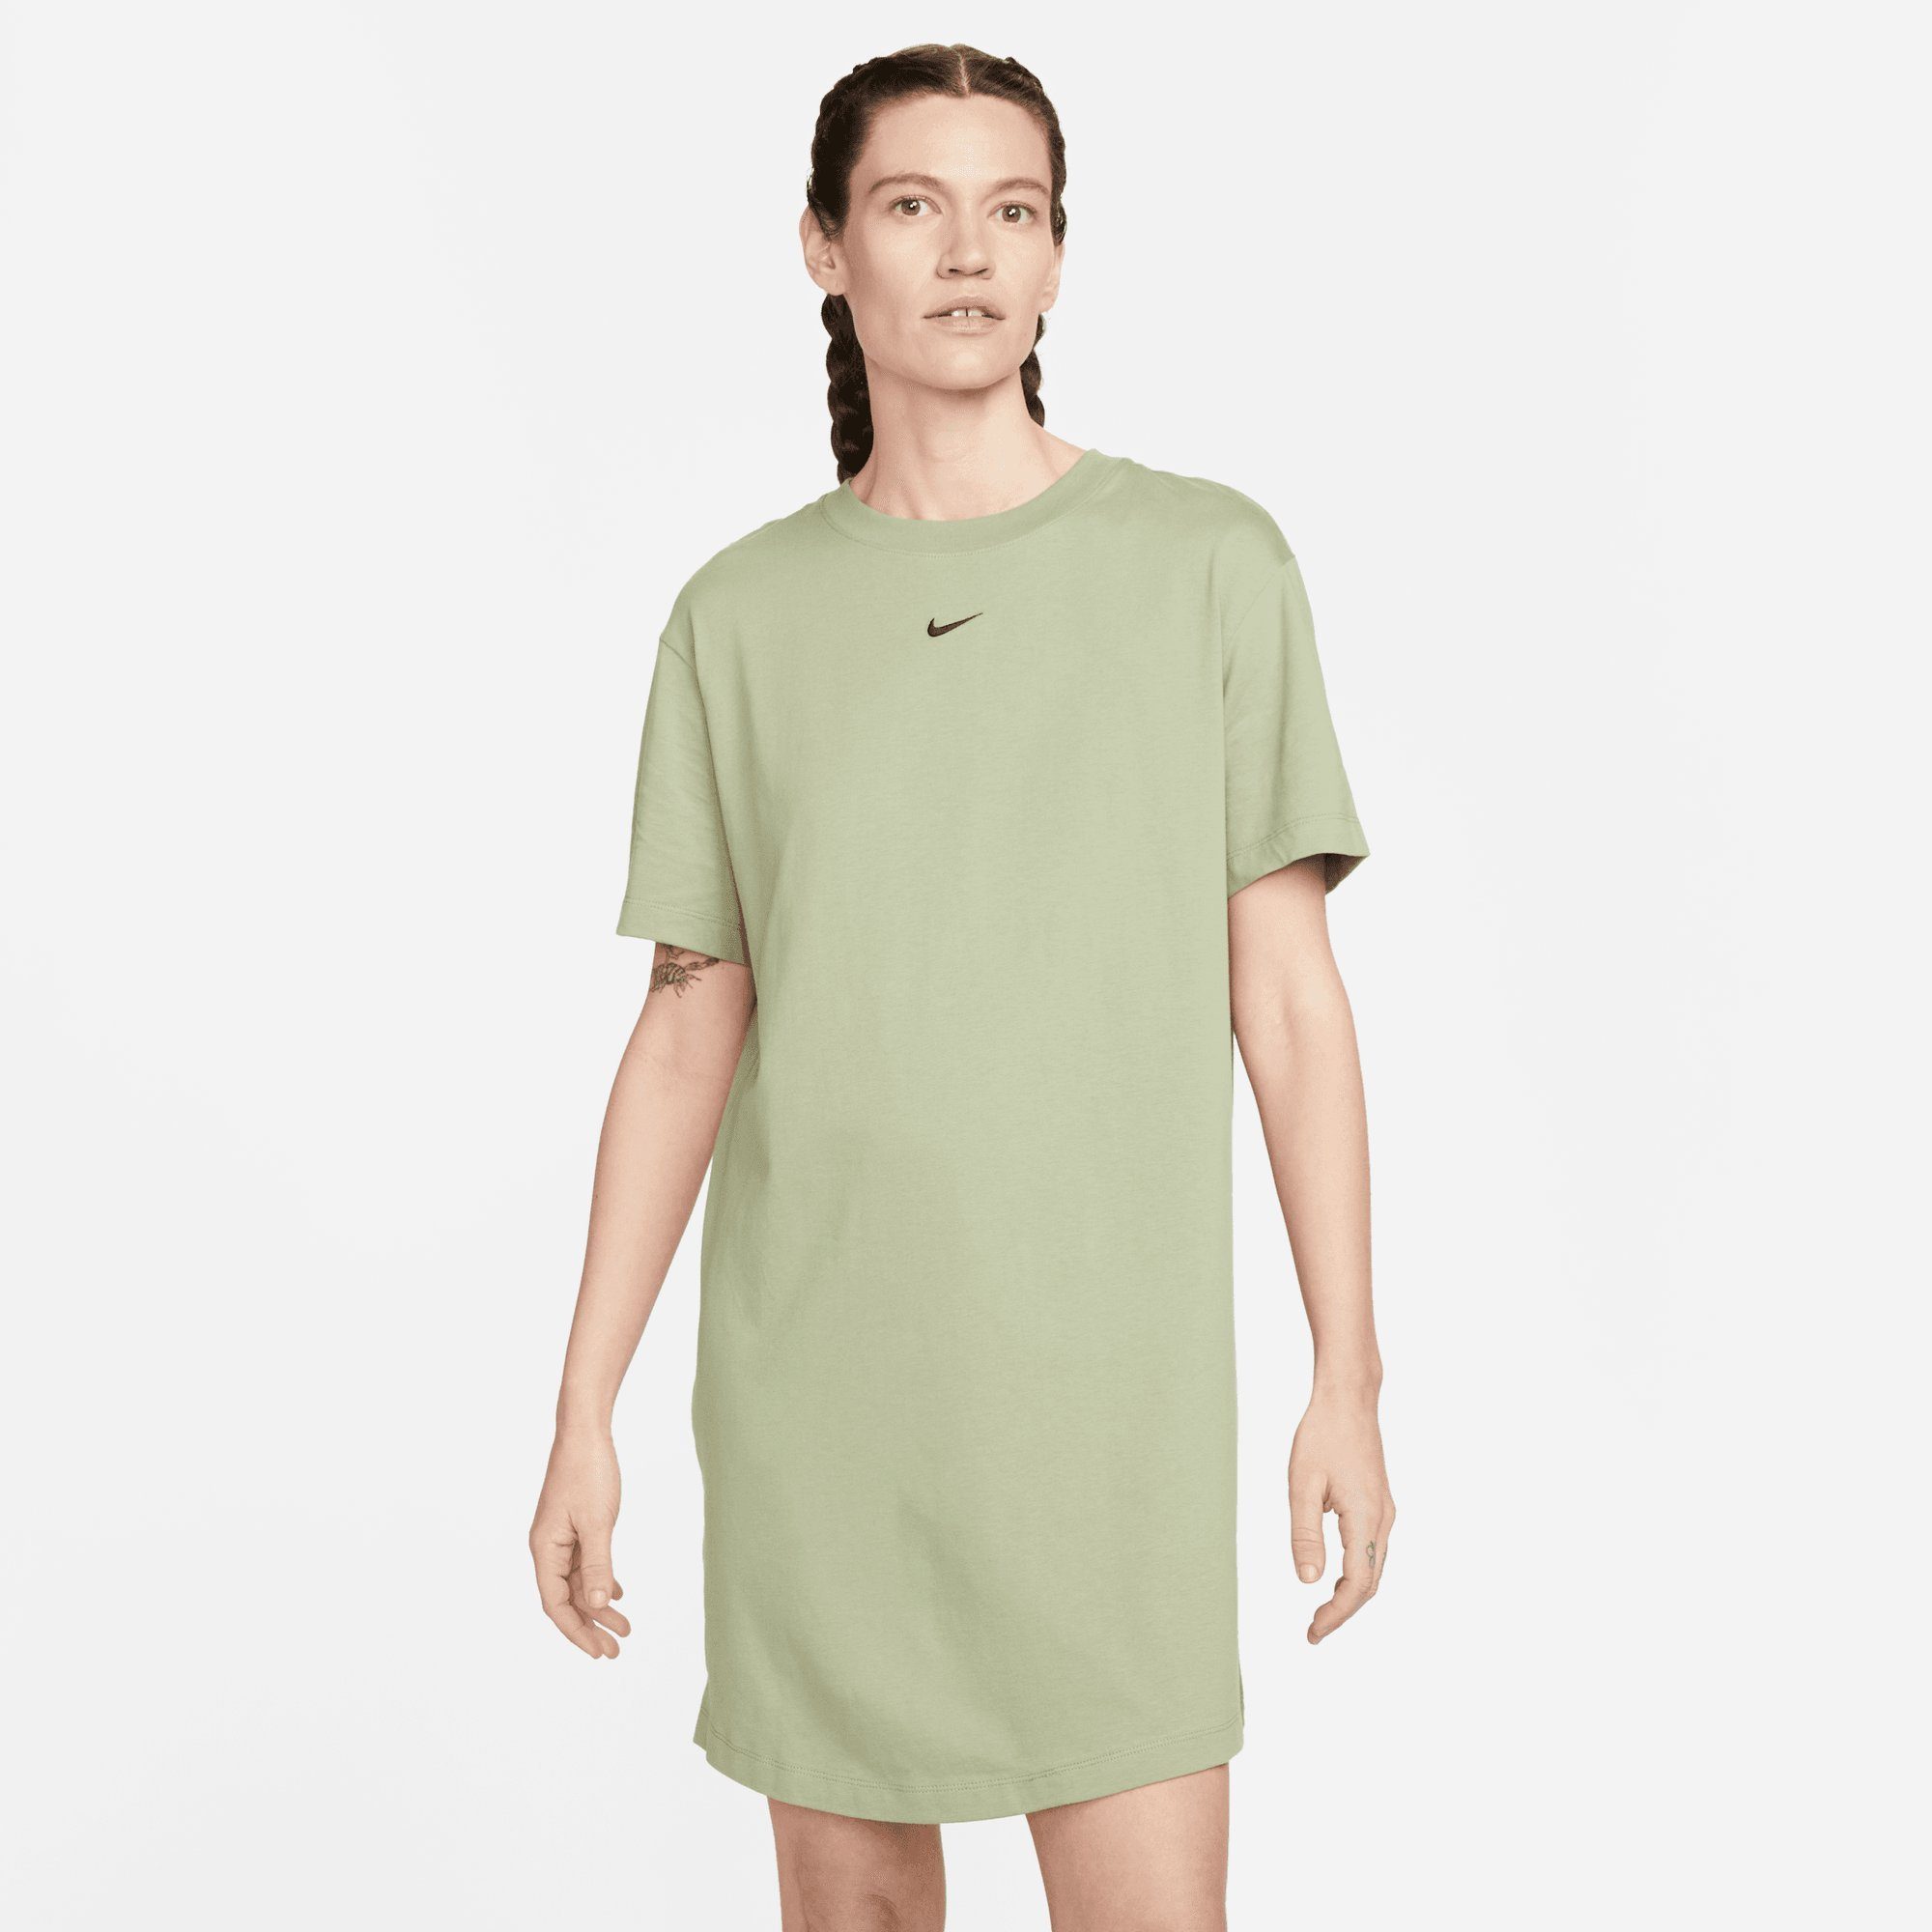 Nike ESSENTIAL GREEN/BLACK Sportswear DRESS OIL Sommerkleid WOMEN'S SHORT-SLEEVE